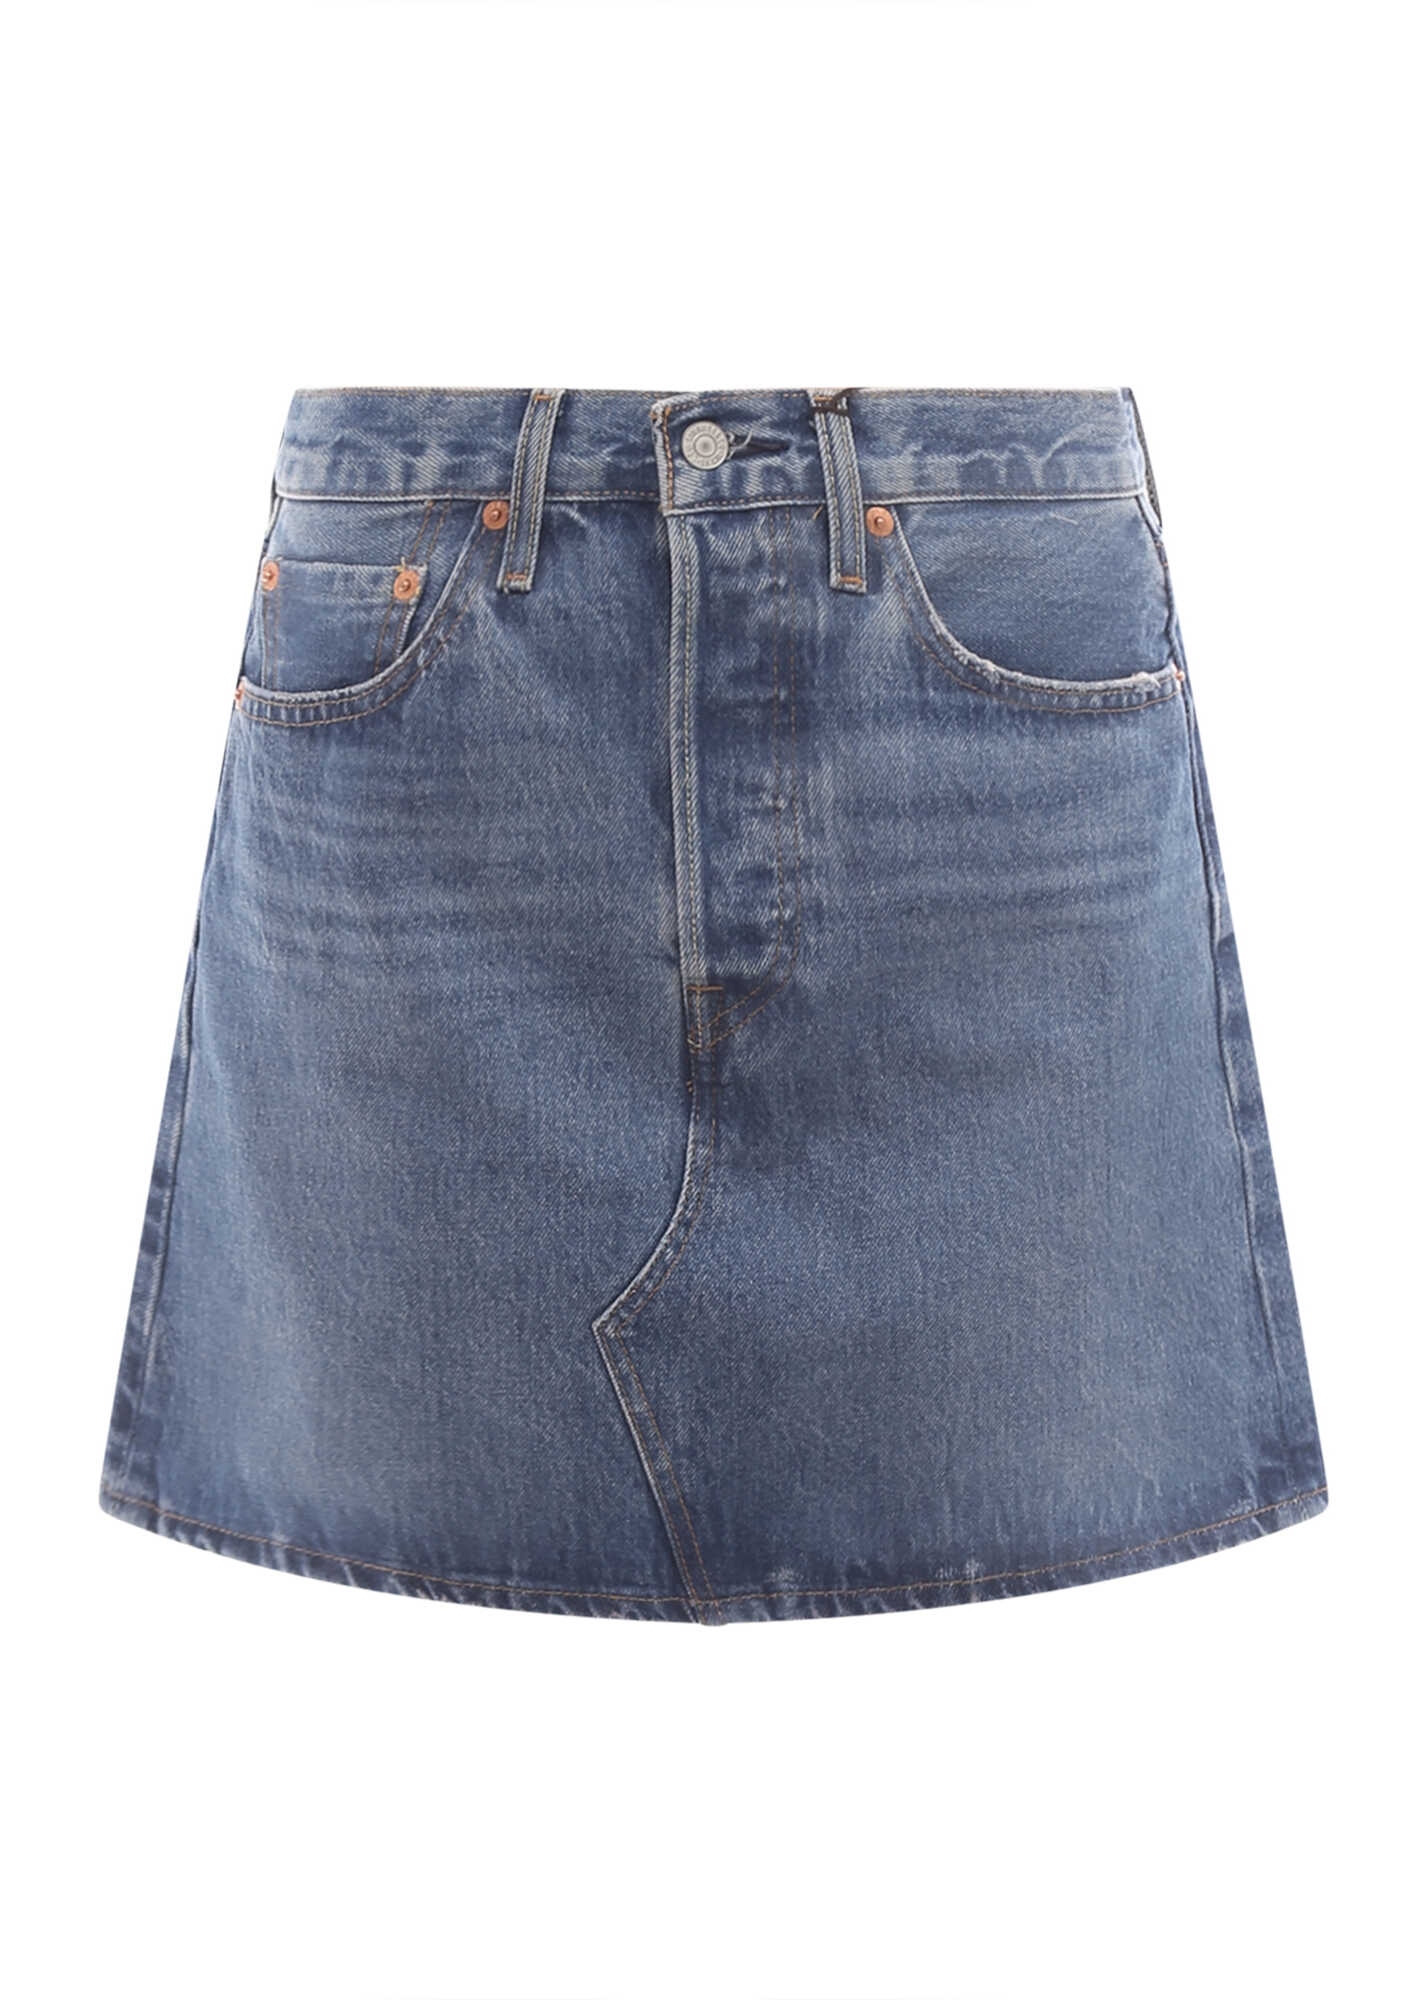 Levi's® Skirt Blue image0